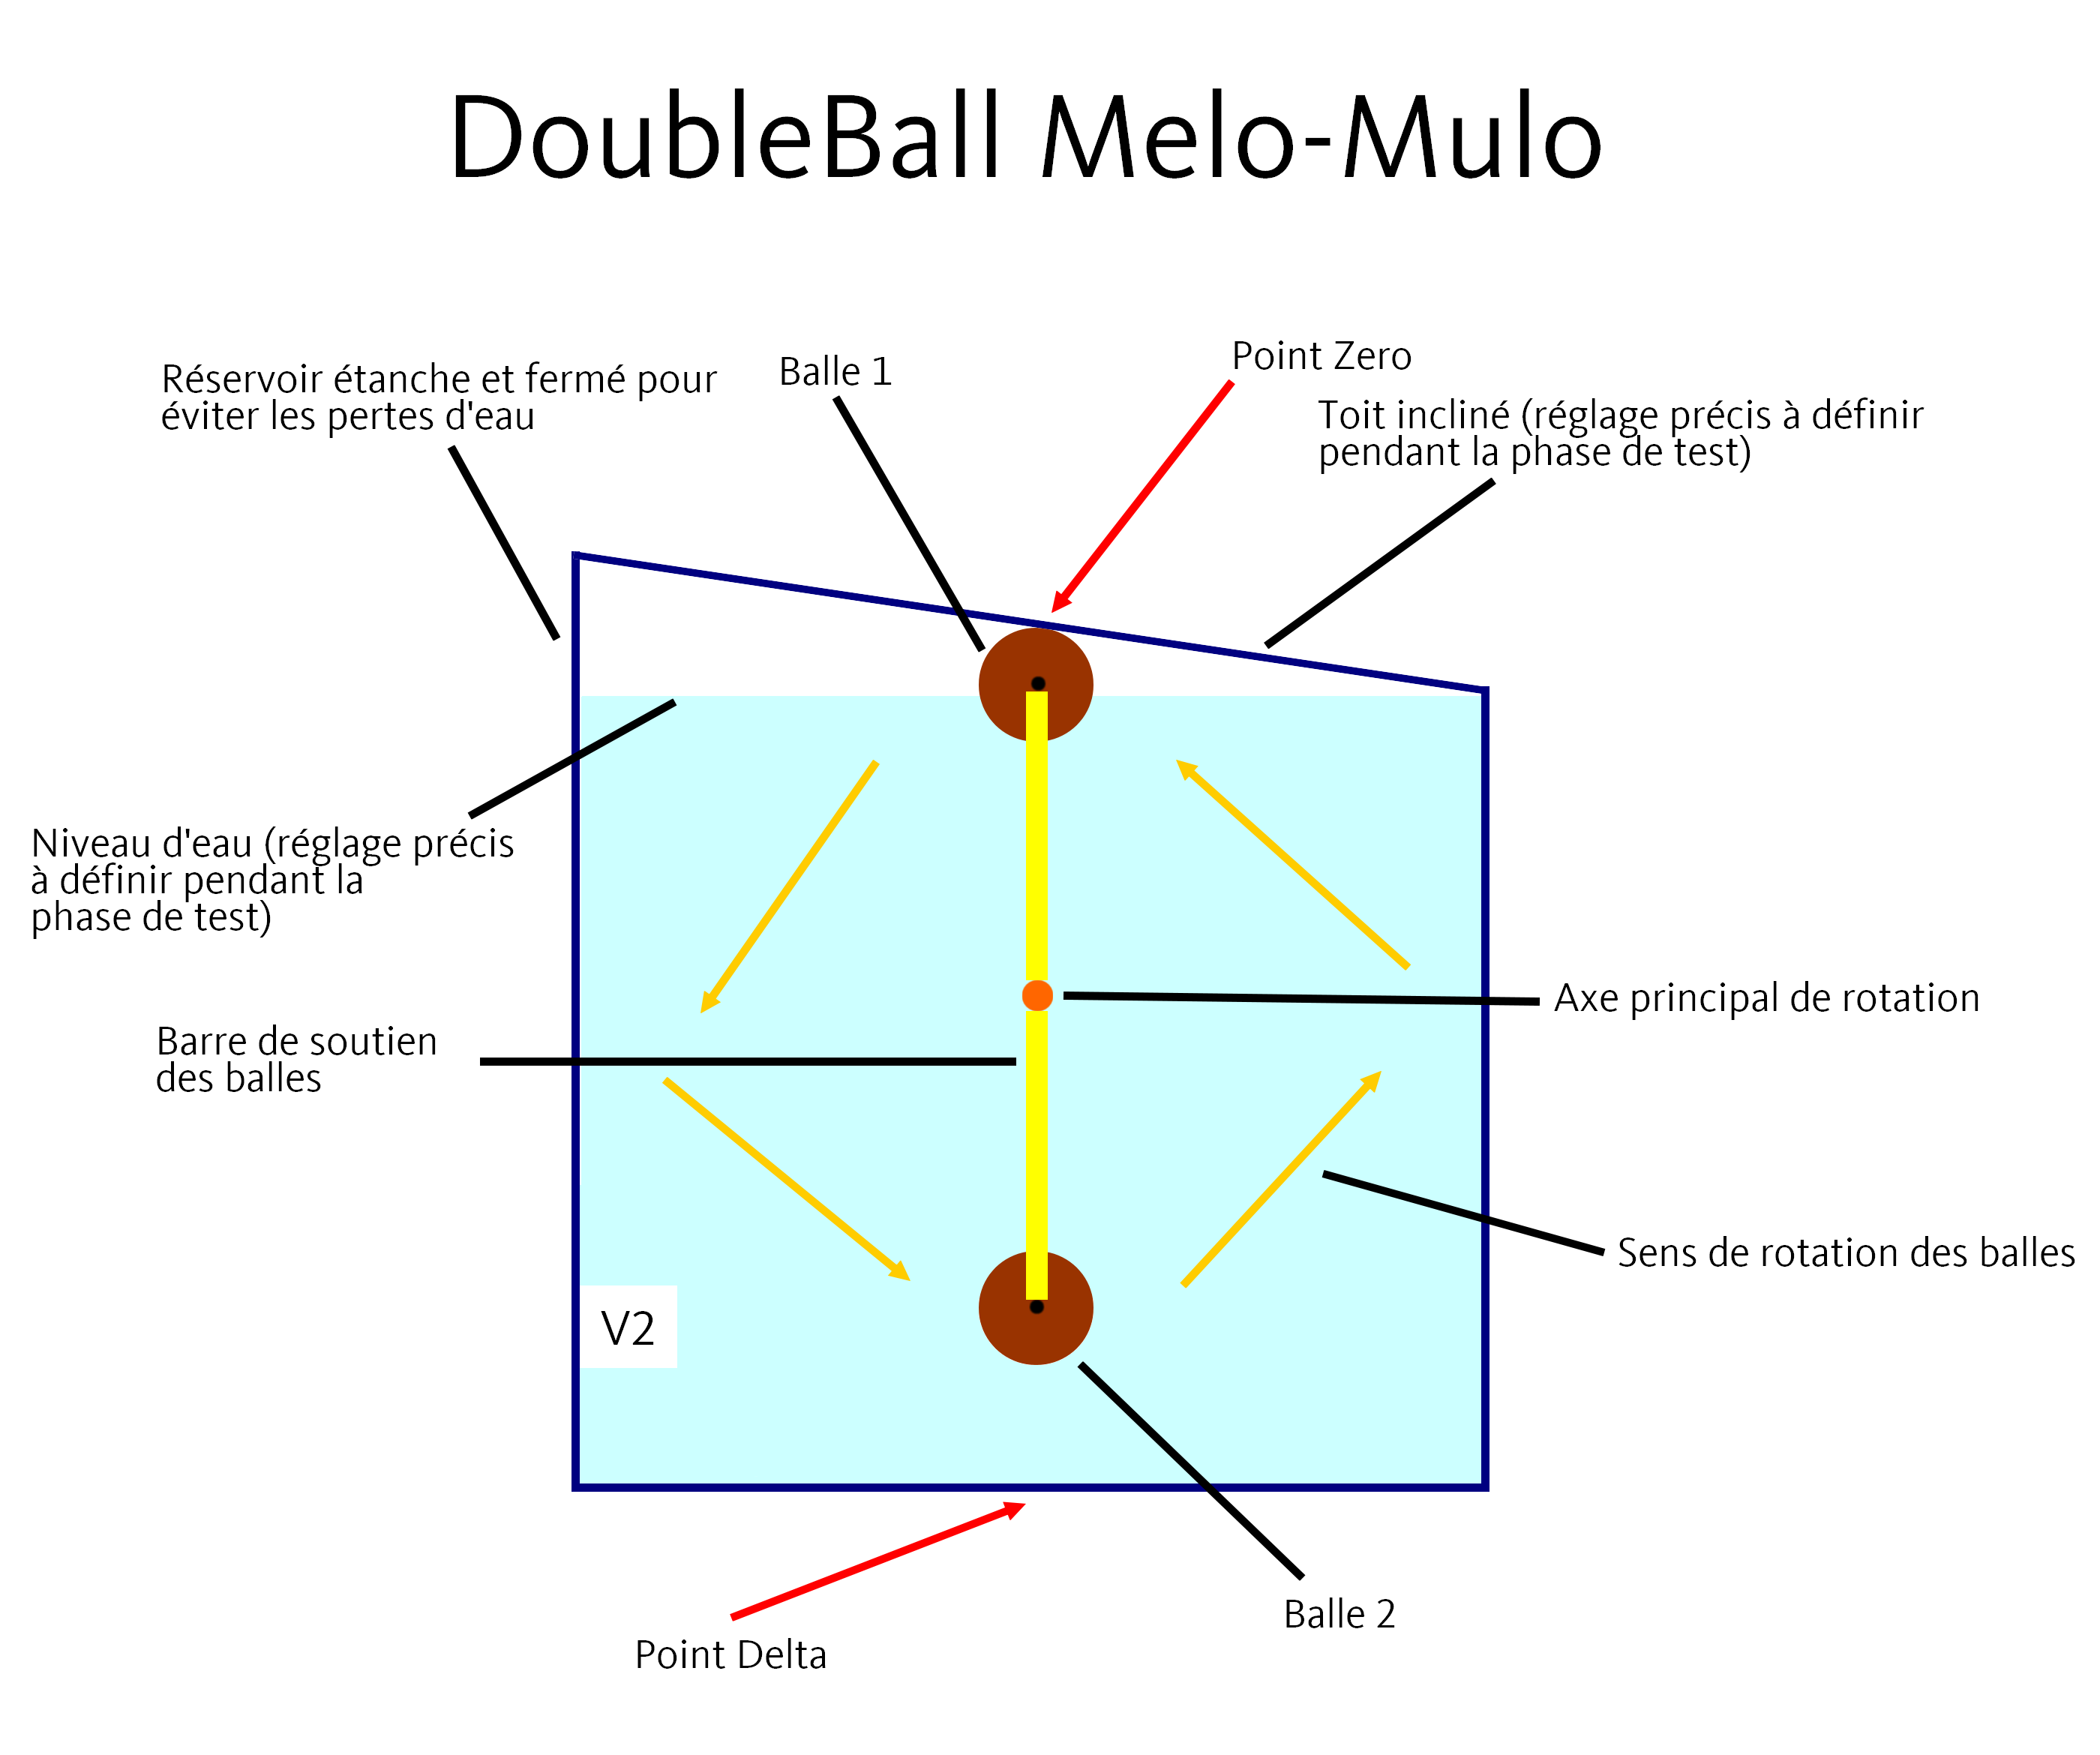 La DoubleBall Melo-Mulo